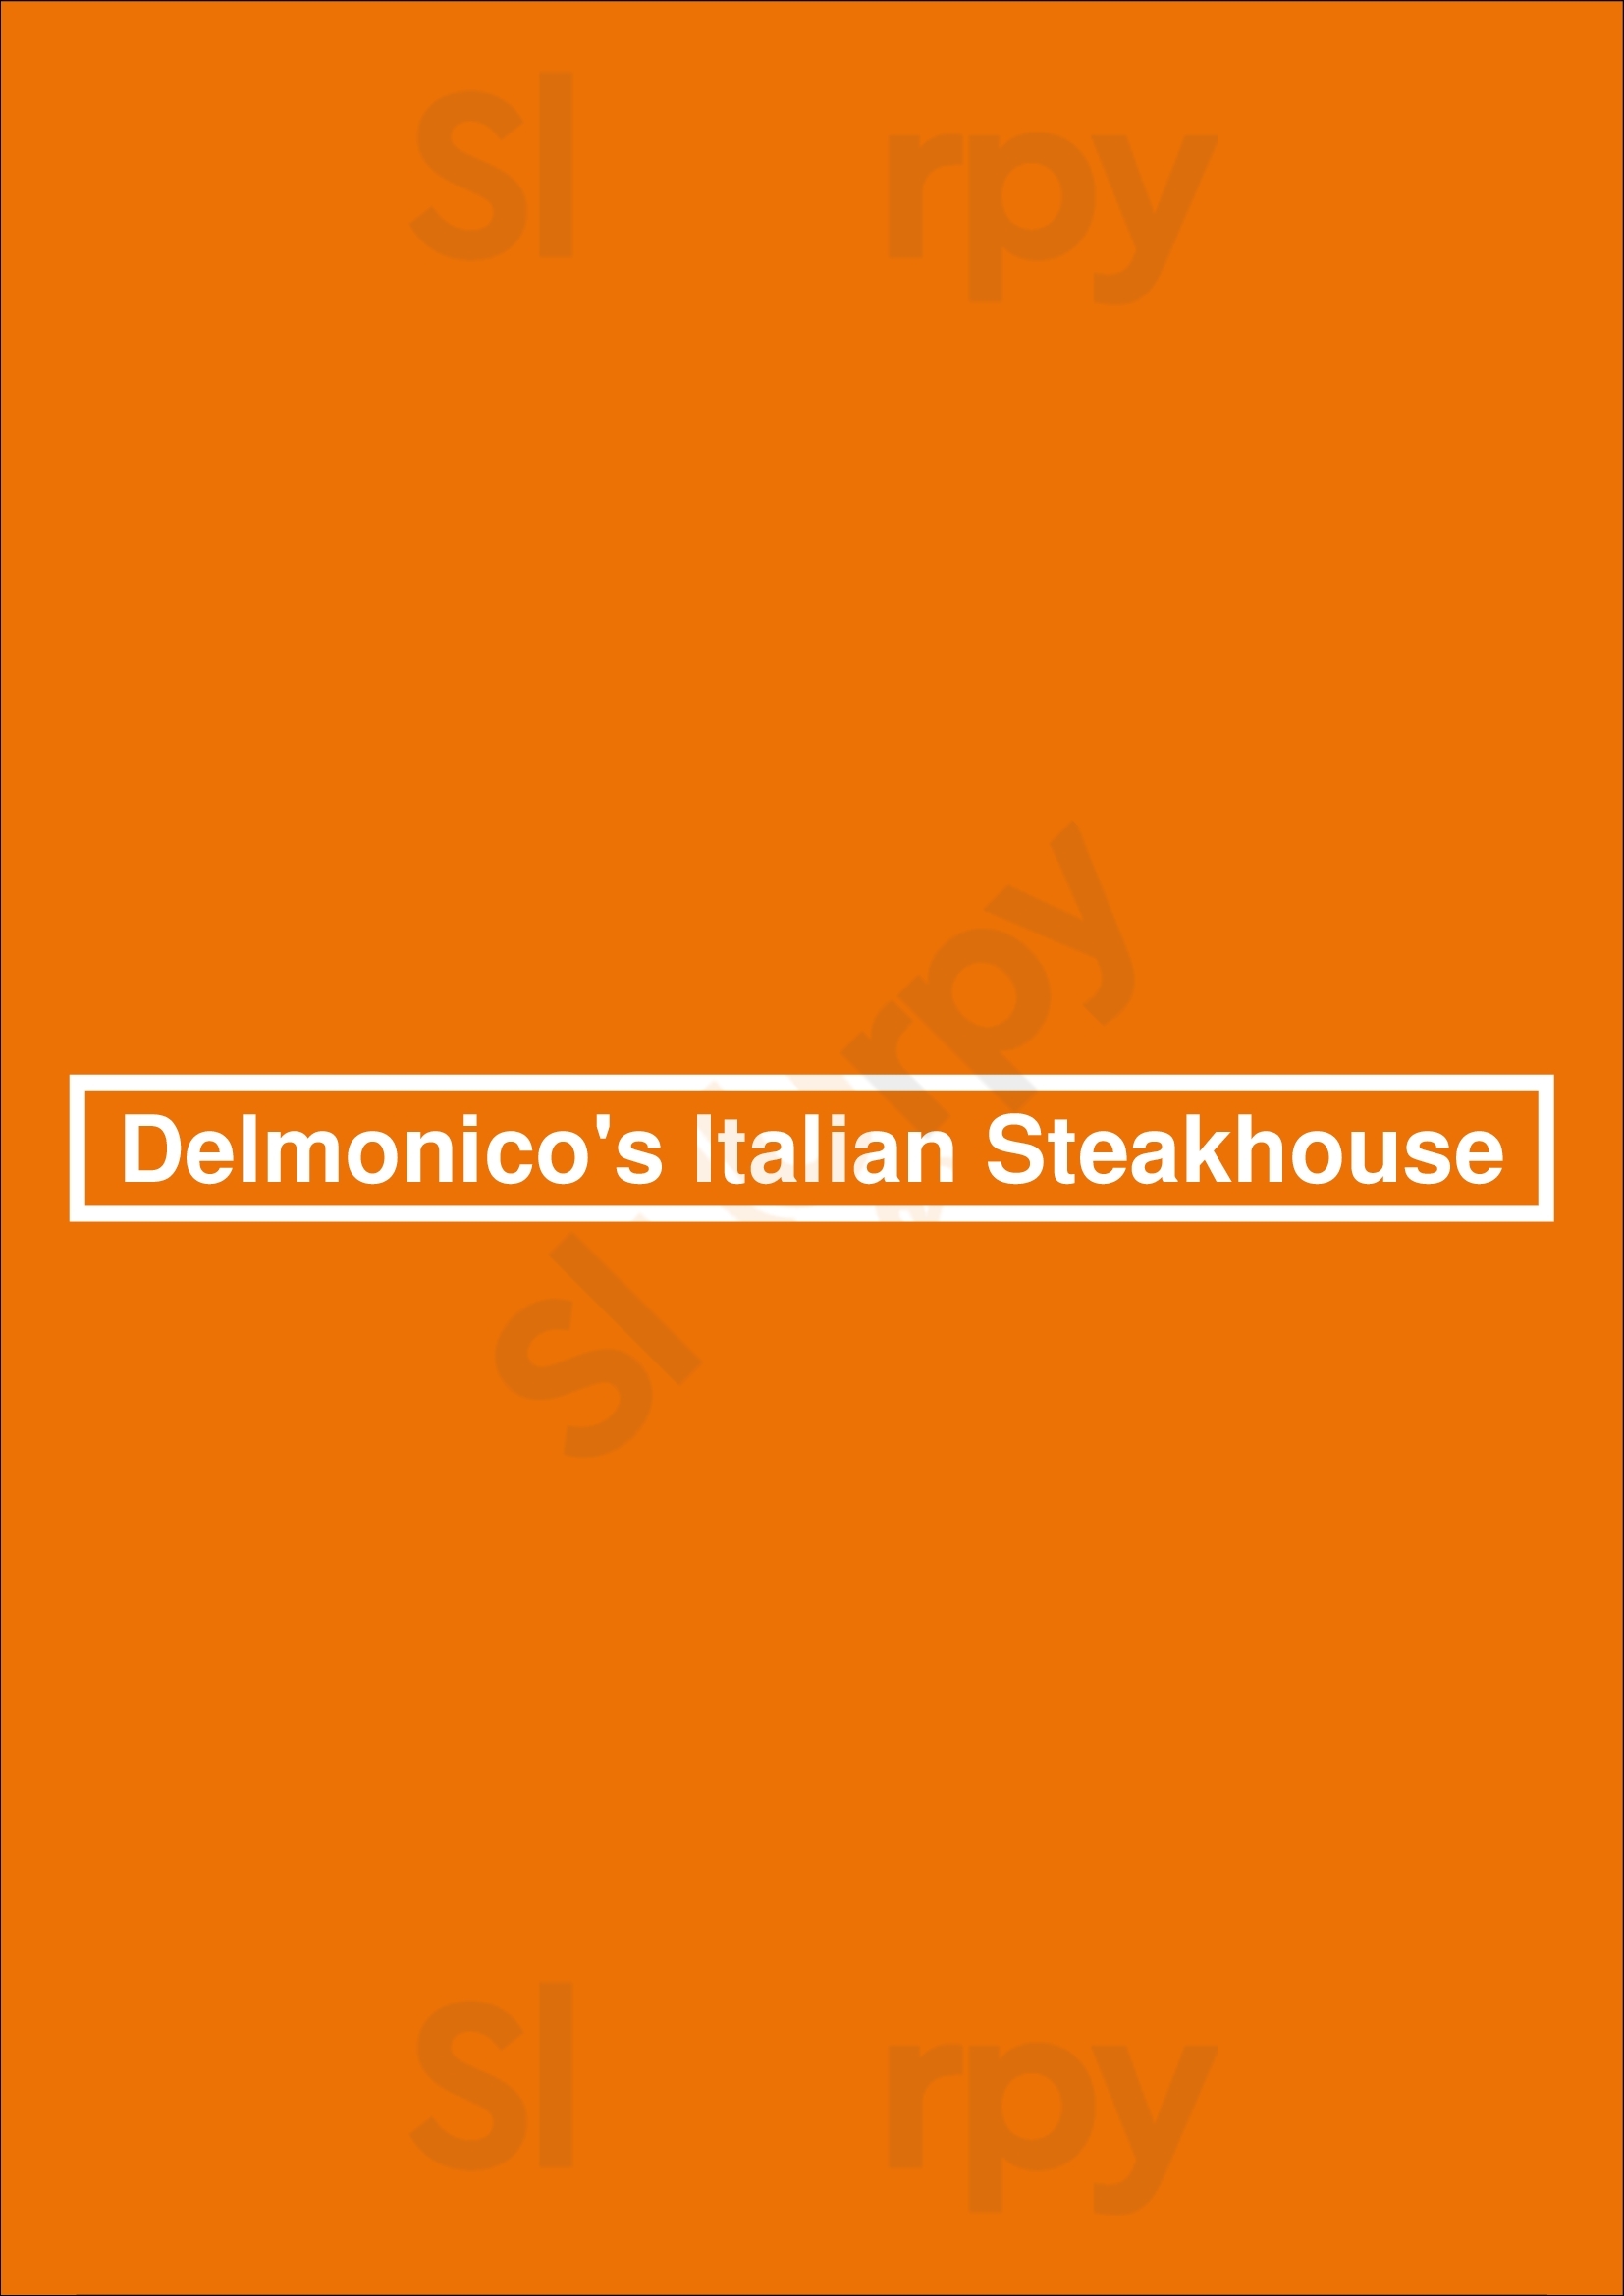 Delmonico's Italian Steakhouse Orlando Menu - 1